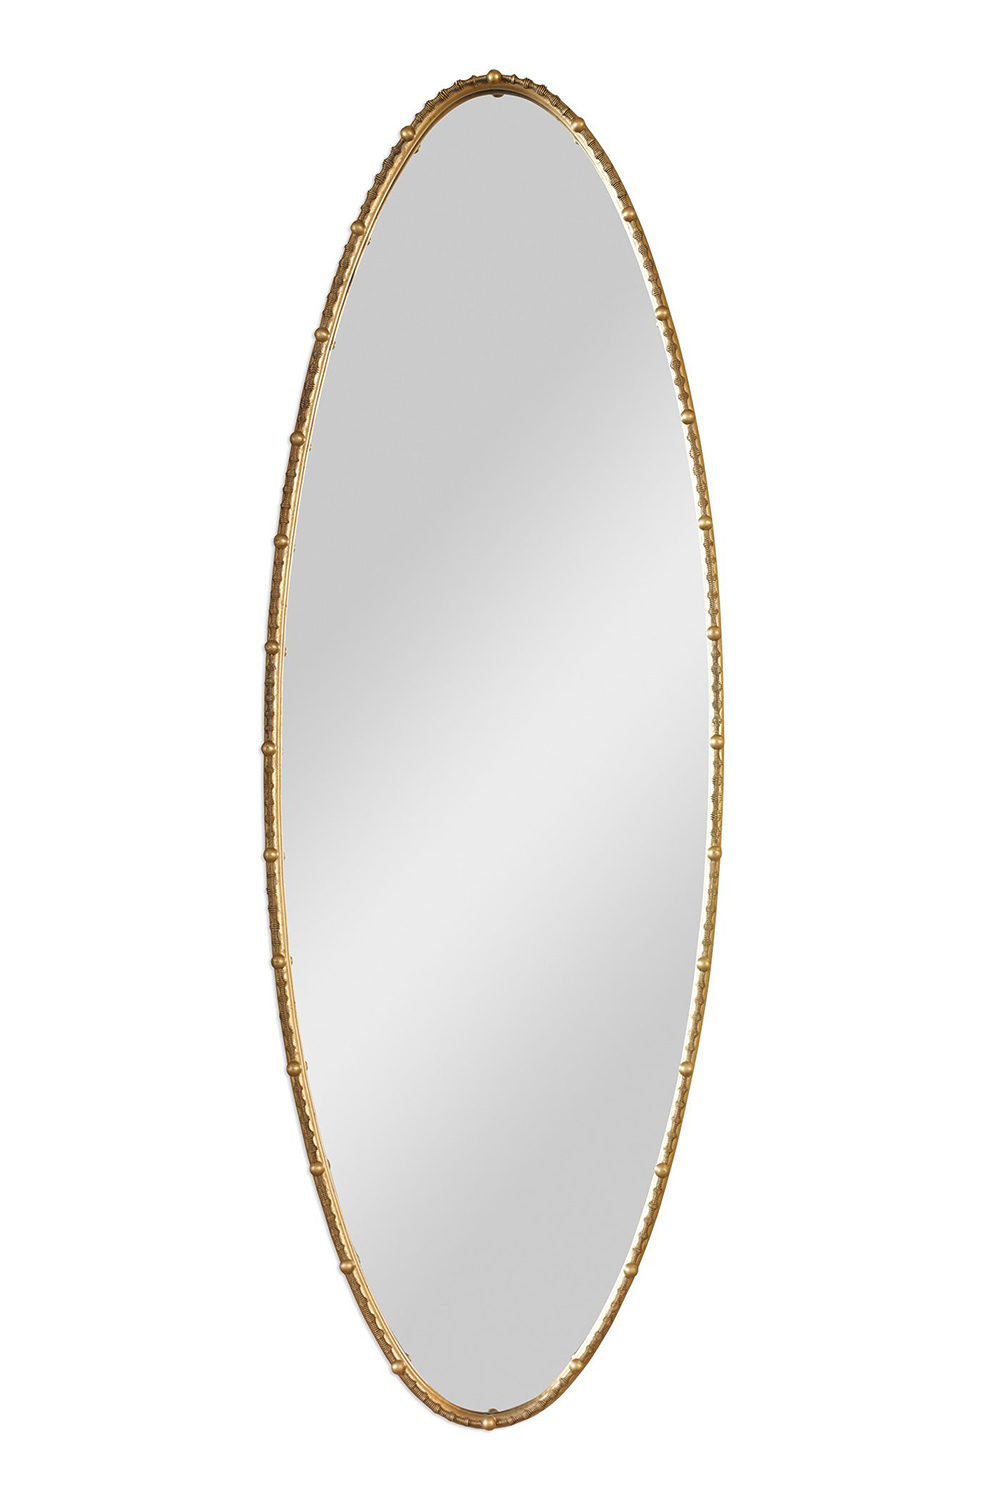 Uttermost Hadea Oval Mirror - Gold